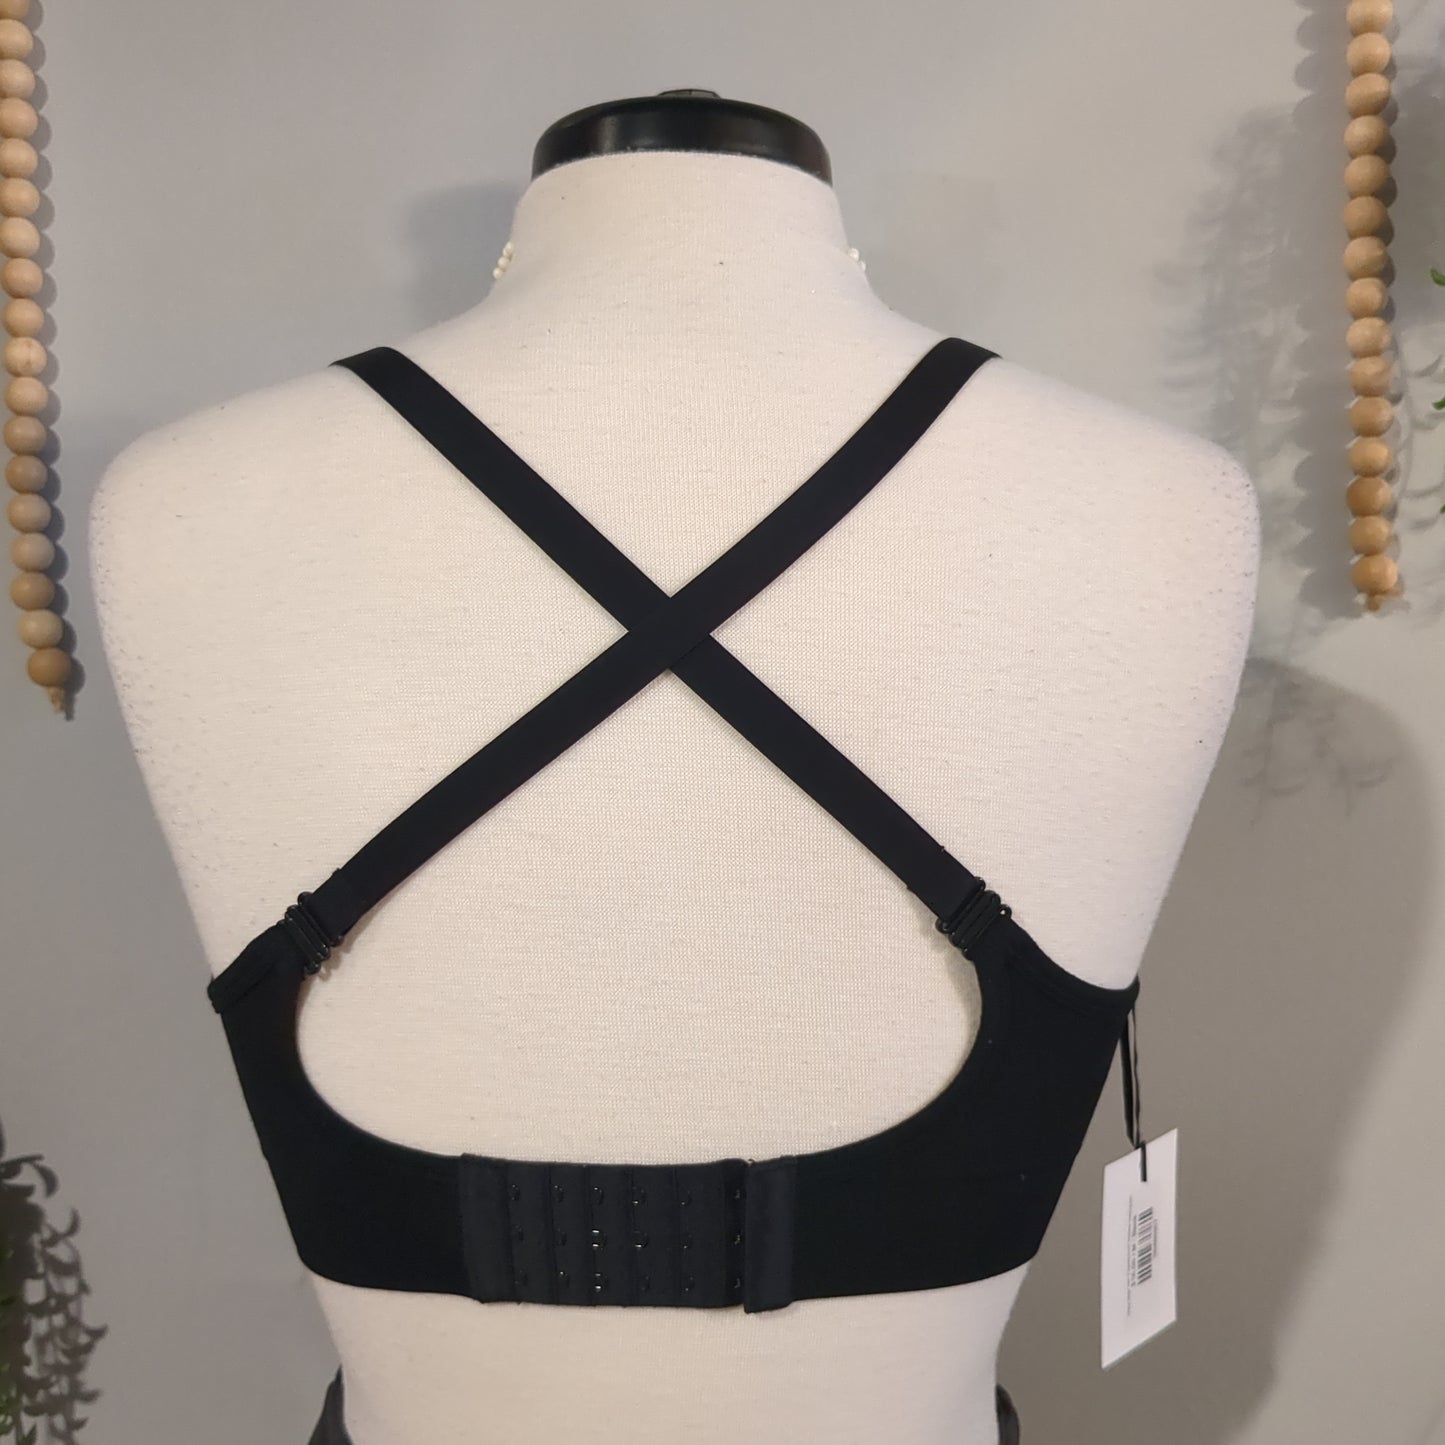 Clasp strap rear X lightly lined stretchy nursing bra, Black